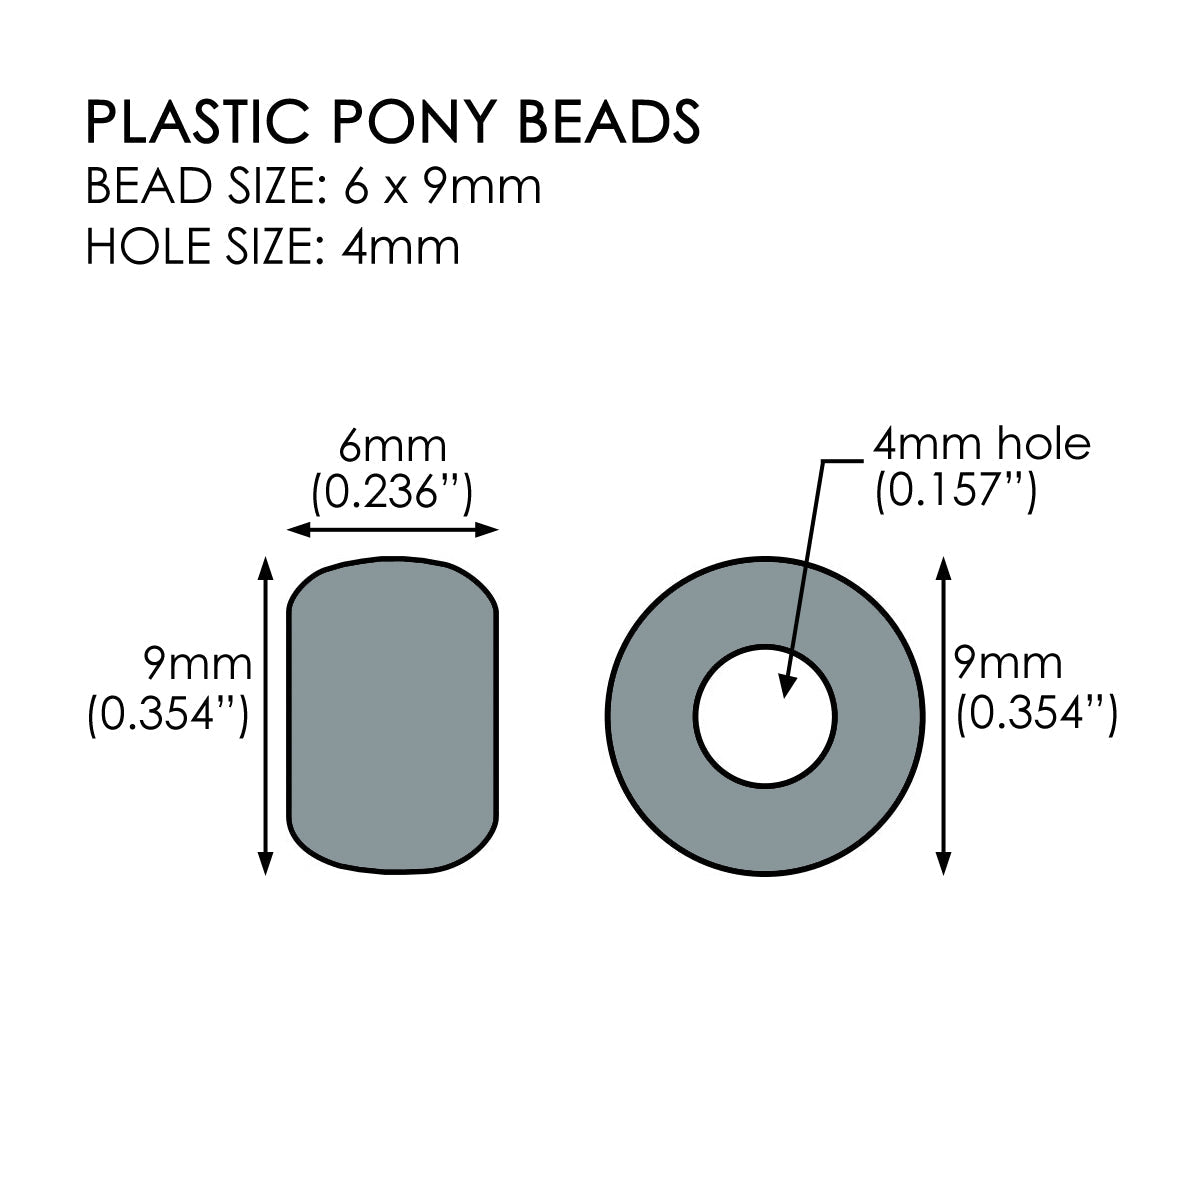 Turquoise Plastic Craft Pony Beads 6x9mm, 500 beads Bulk Pack - Bead Bee